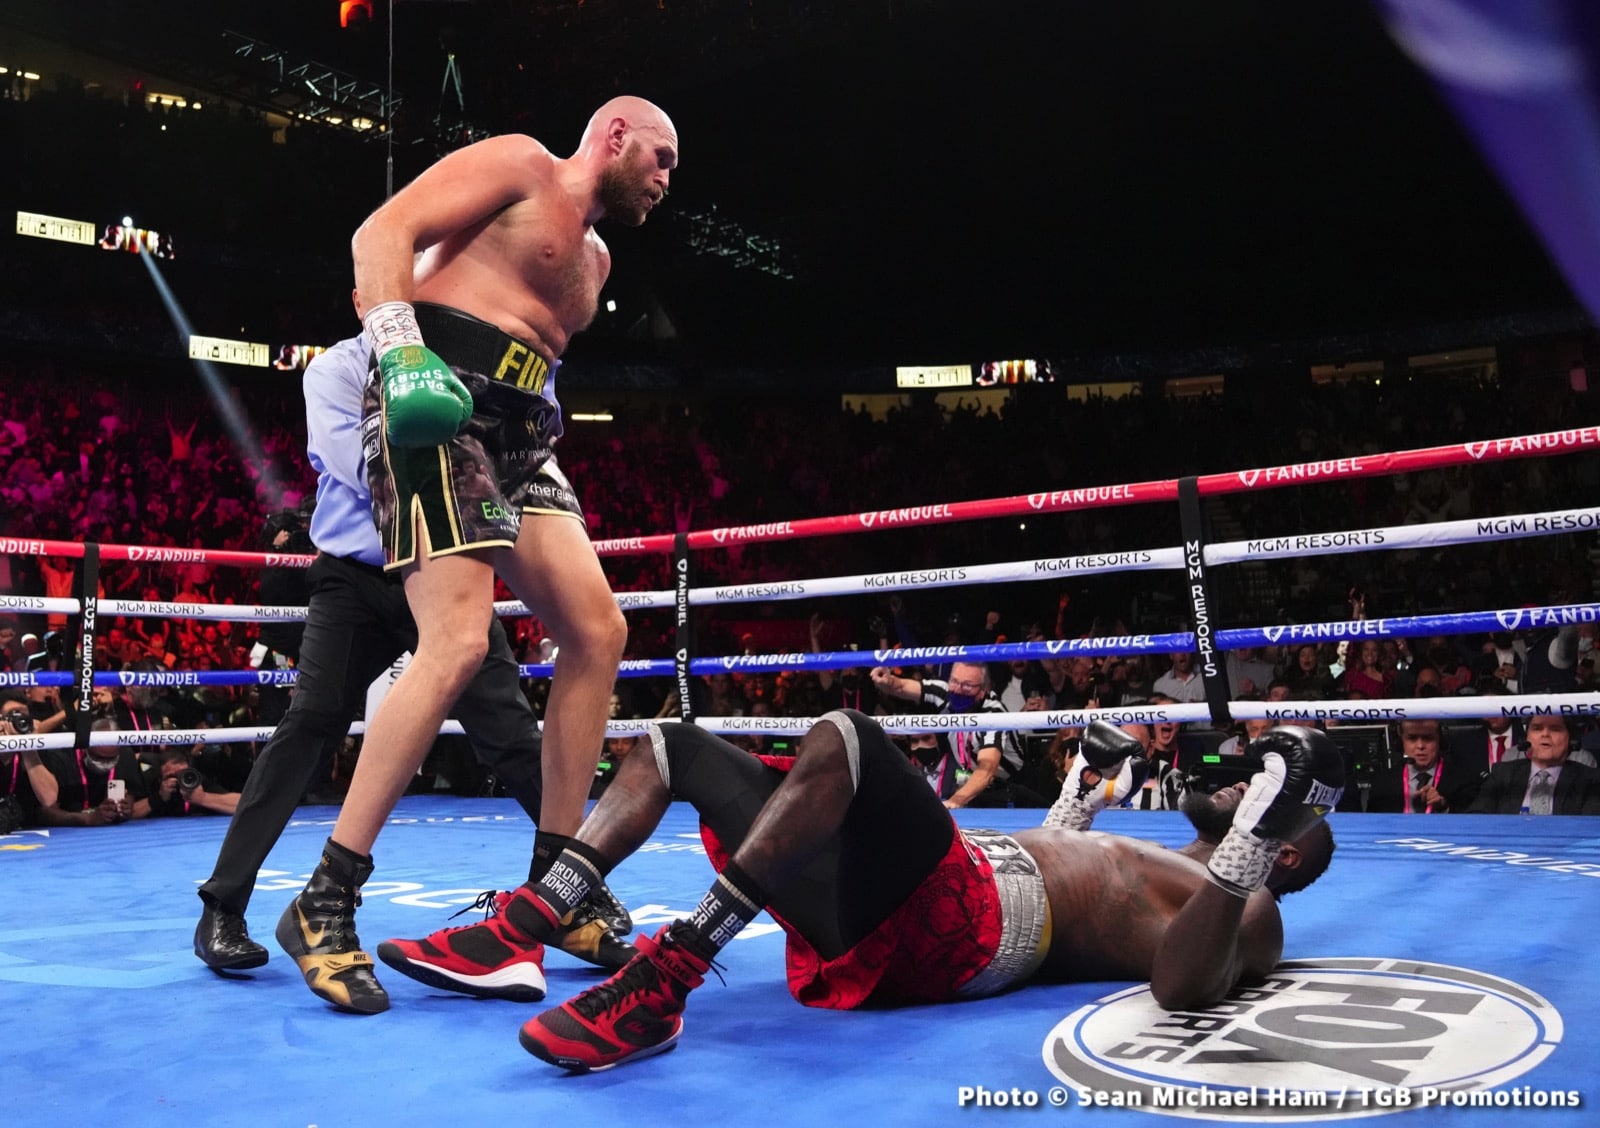 Daniel Dubois, Dillian Whyte, Tyson Fury boxing photo and news image